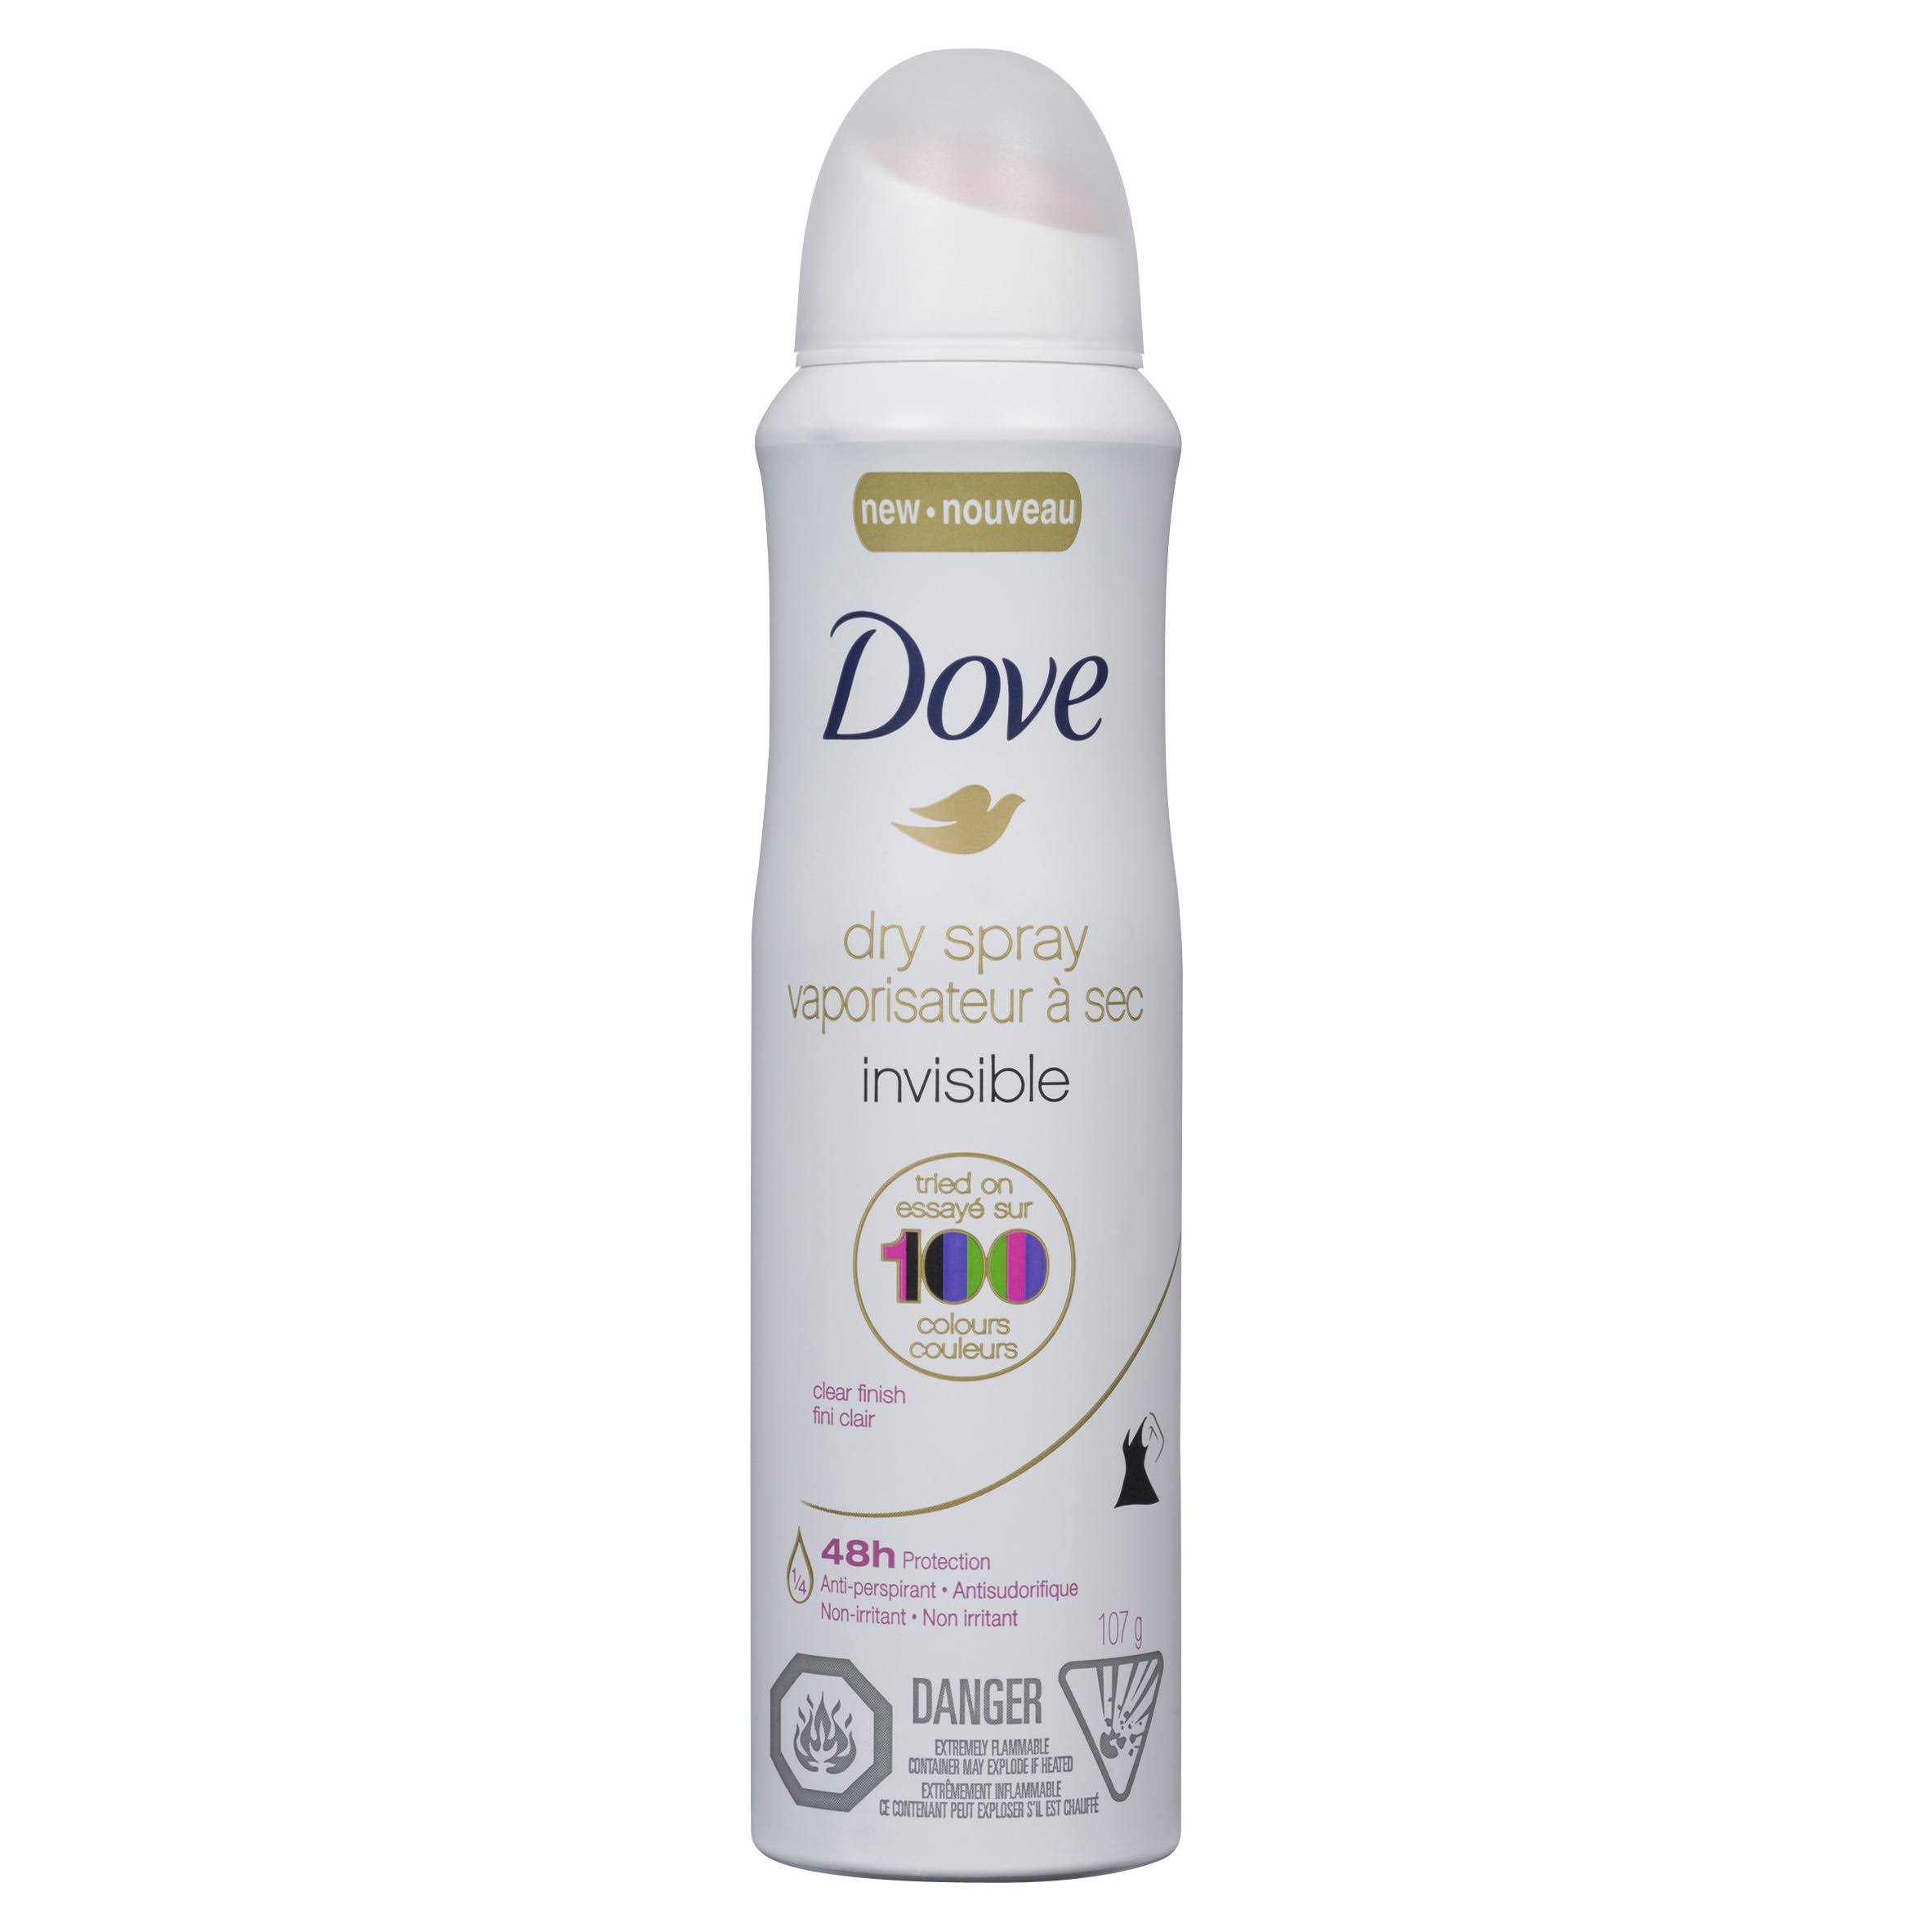 Dove Invisible Antiperspirant Deodorant - Clear Finish, 107g